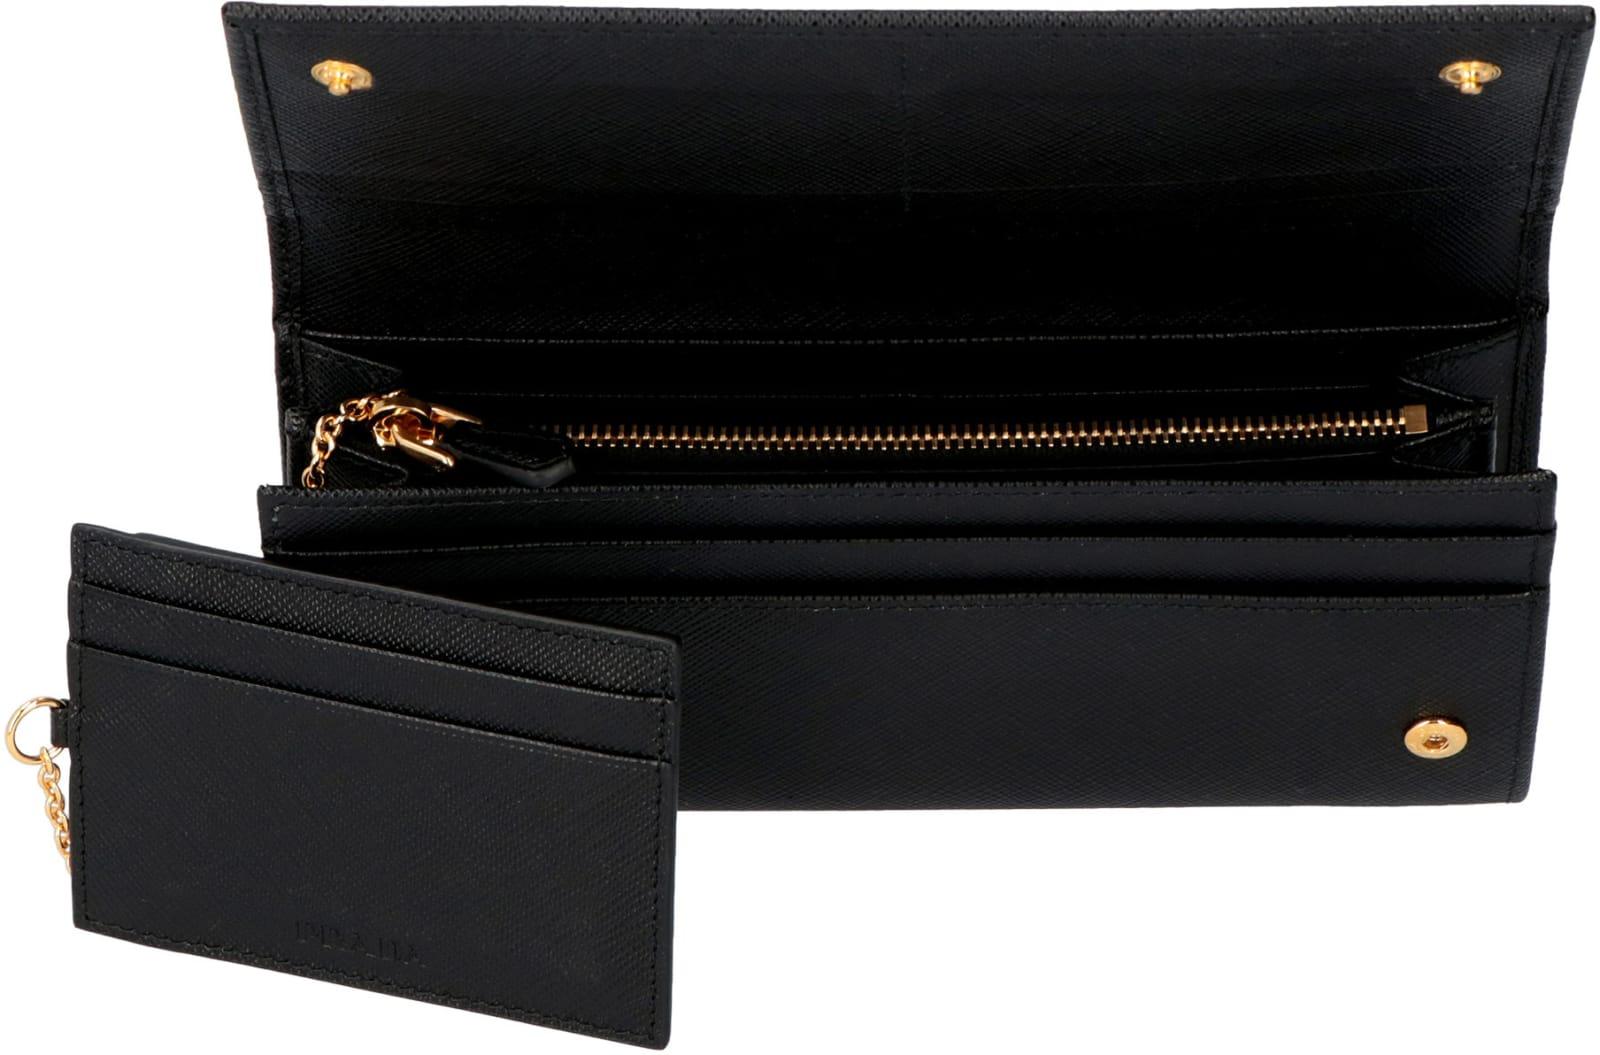 Prada Saffiano Leather Wallet in Black